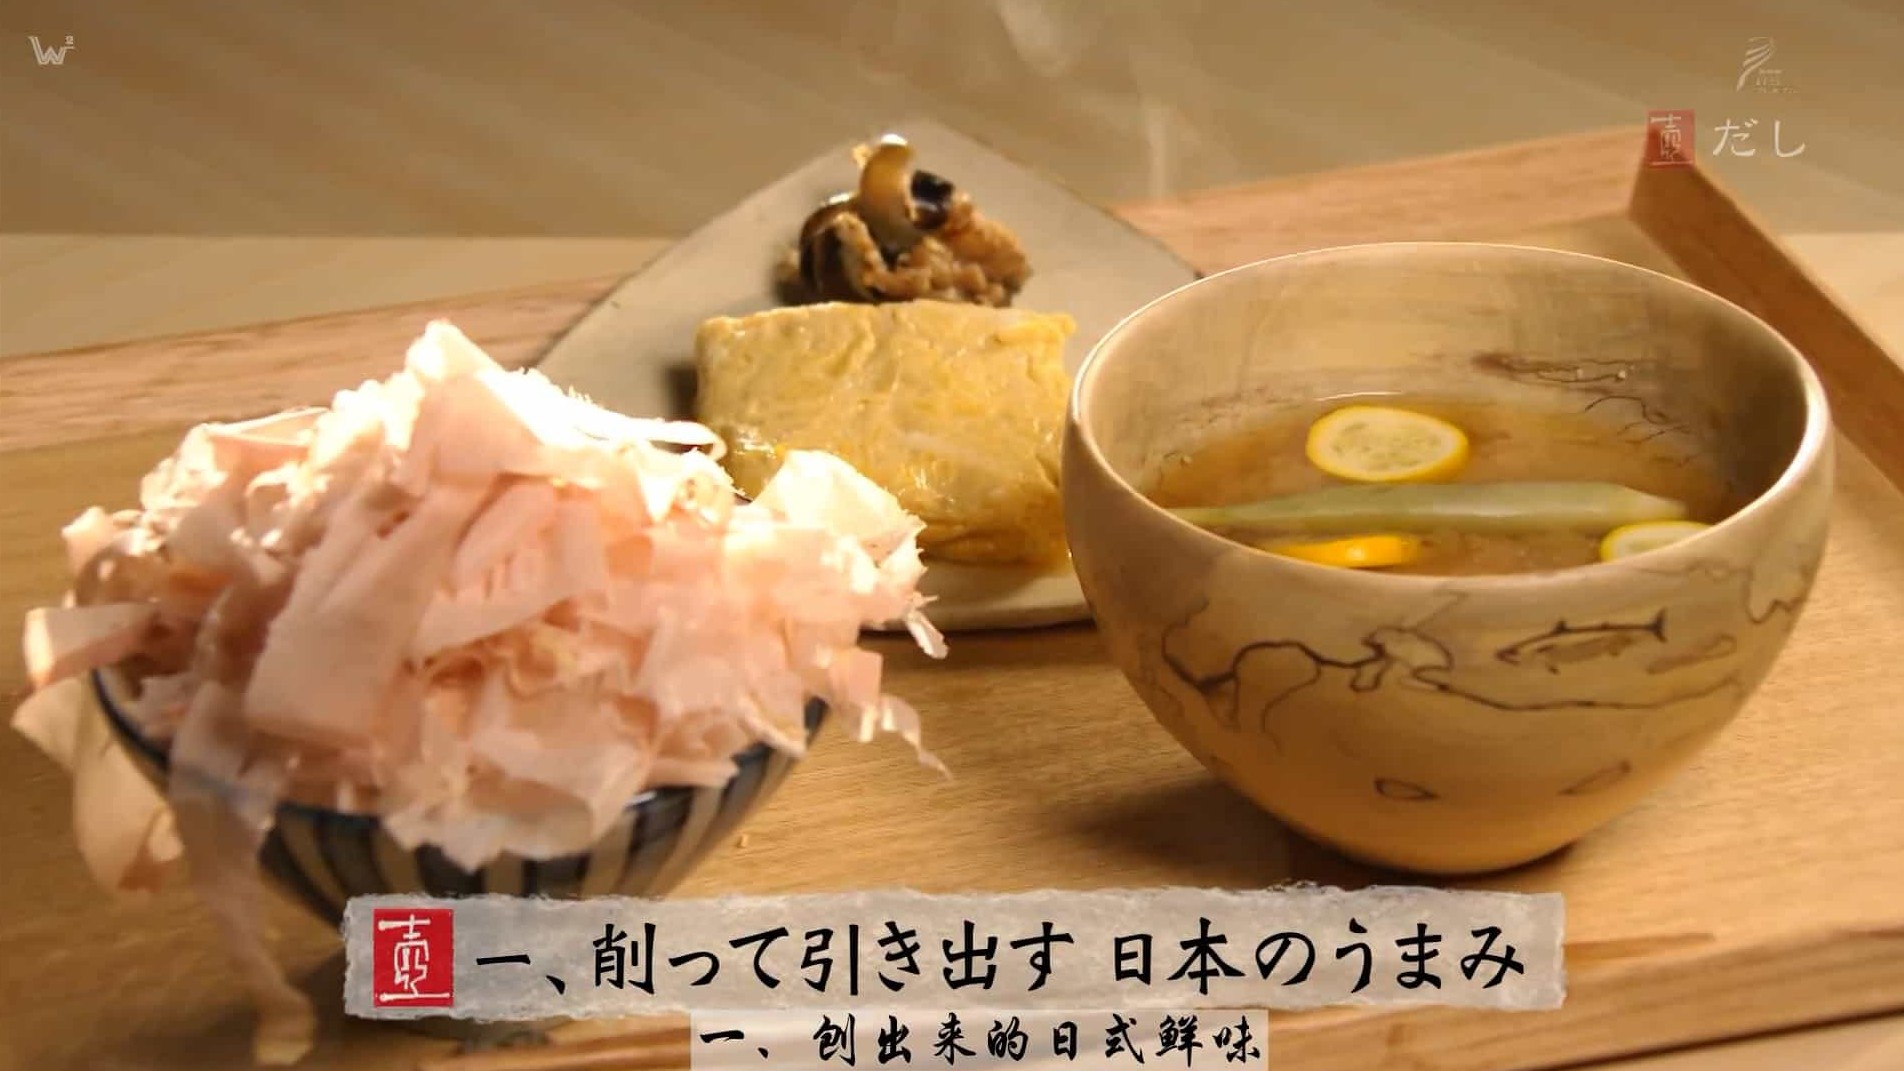 NHK艺术鉴赏纪录片《美之壶 美の壺 2020》